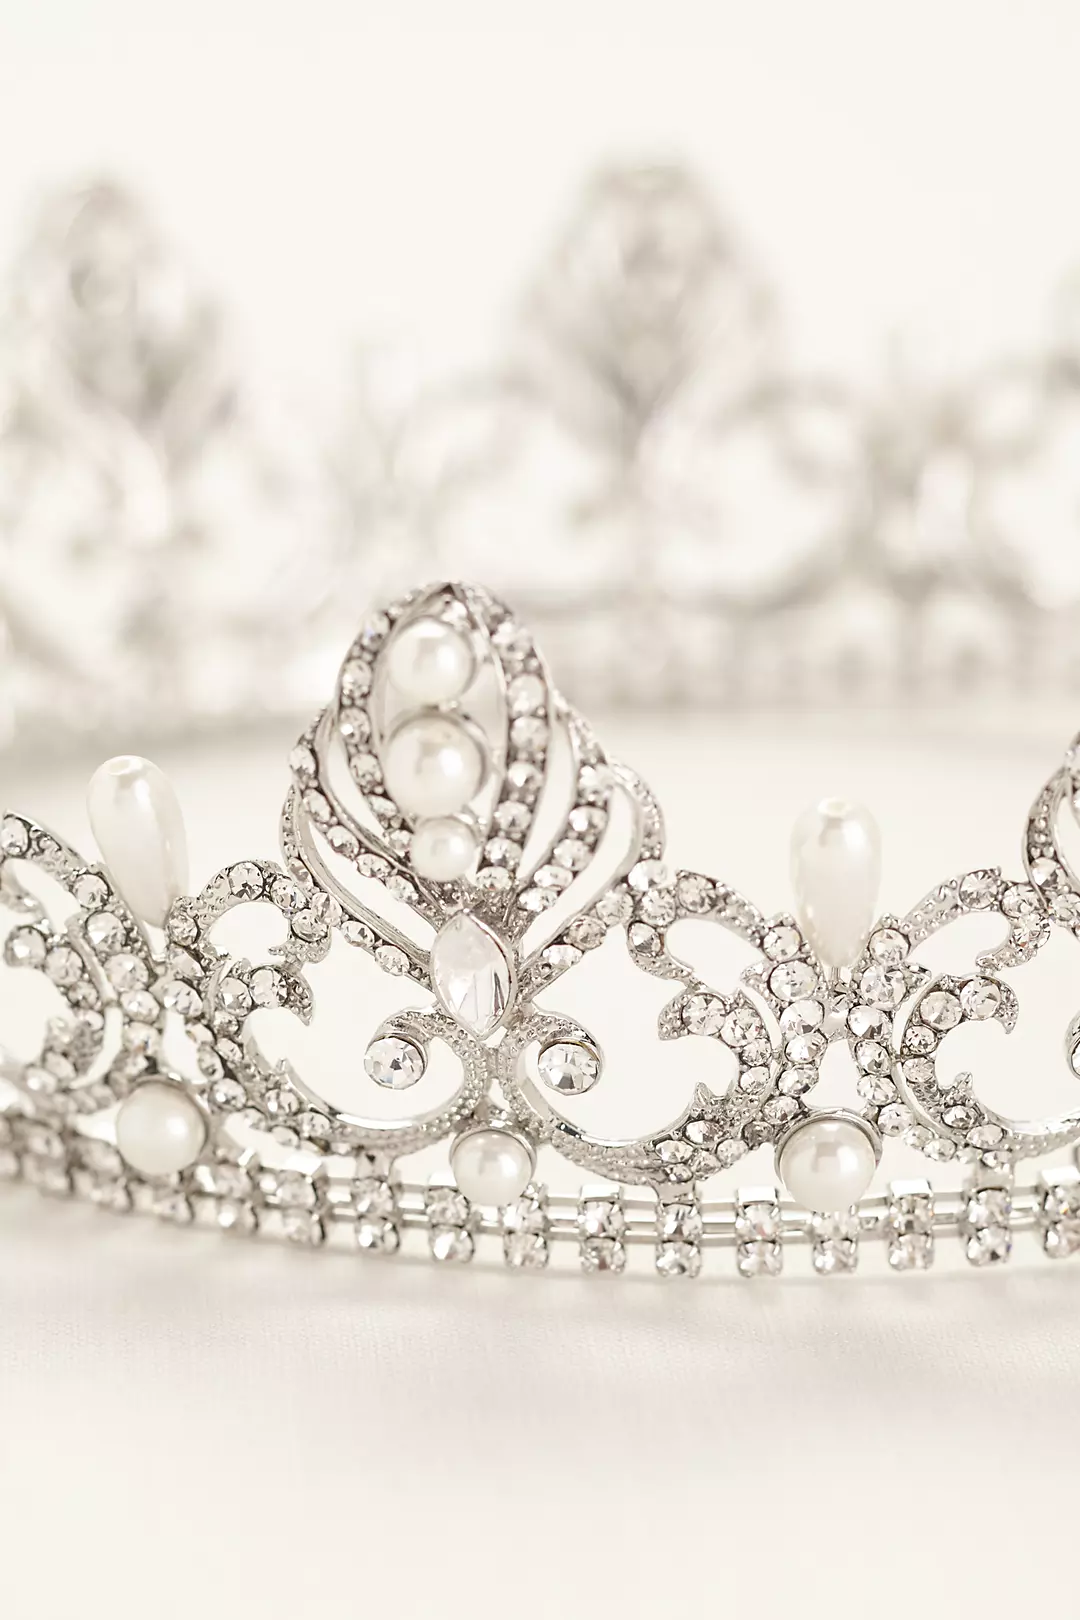 Pearl and Crystal Encrusted Crown Image